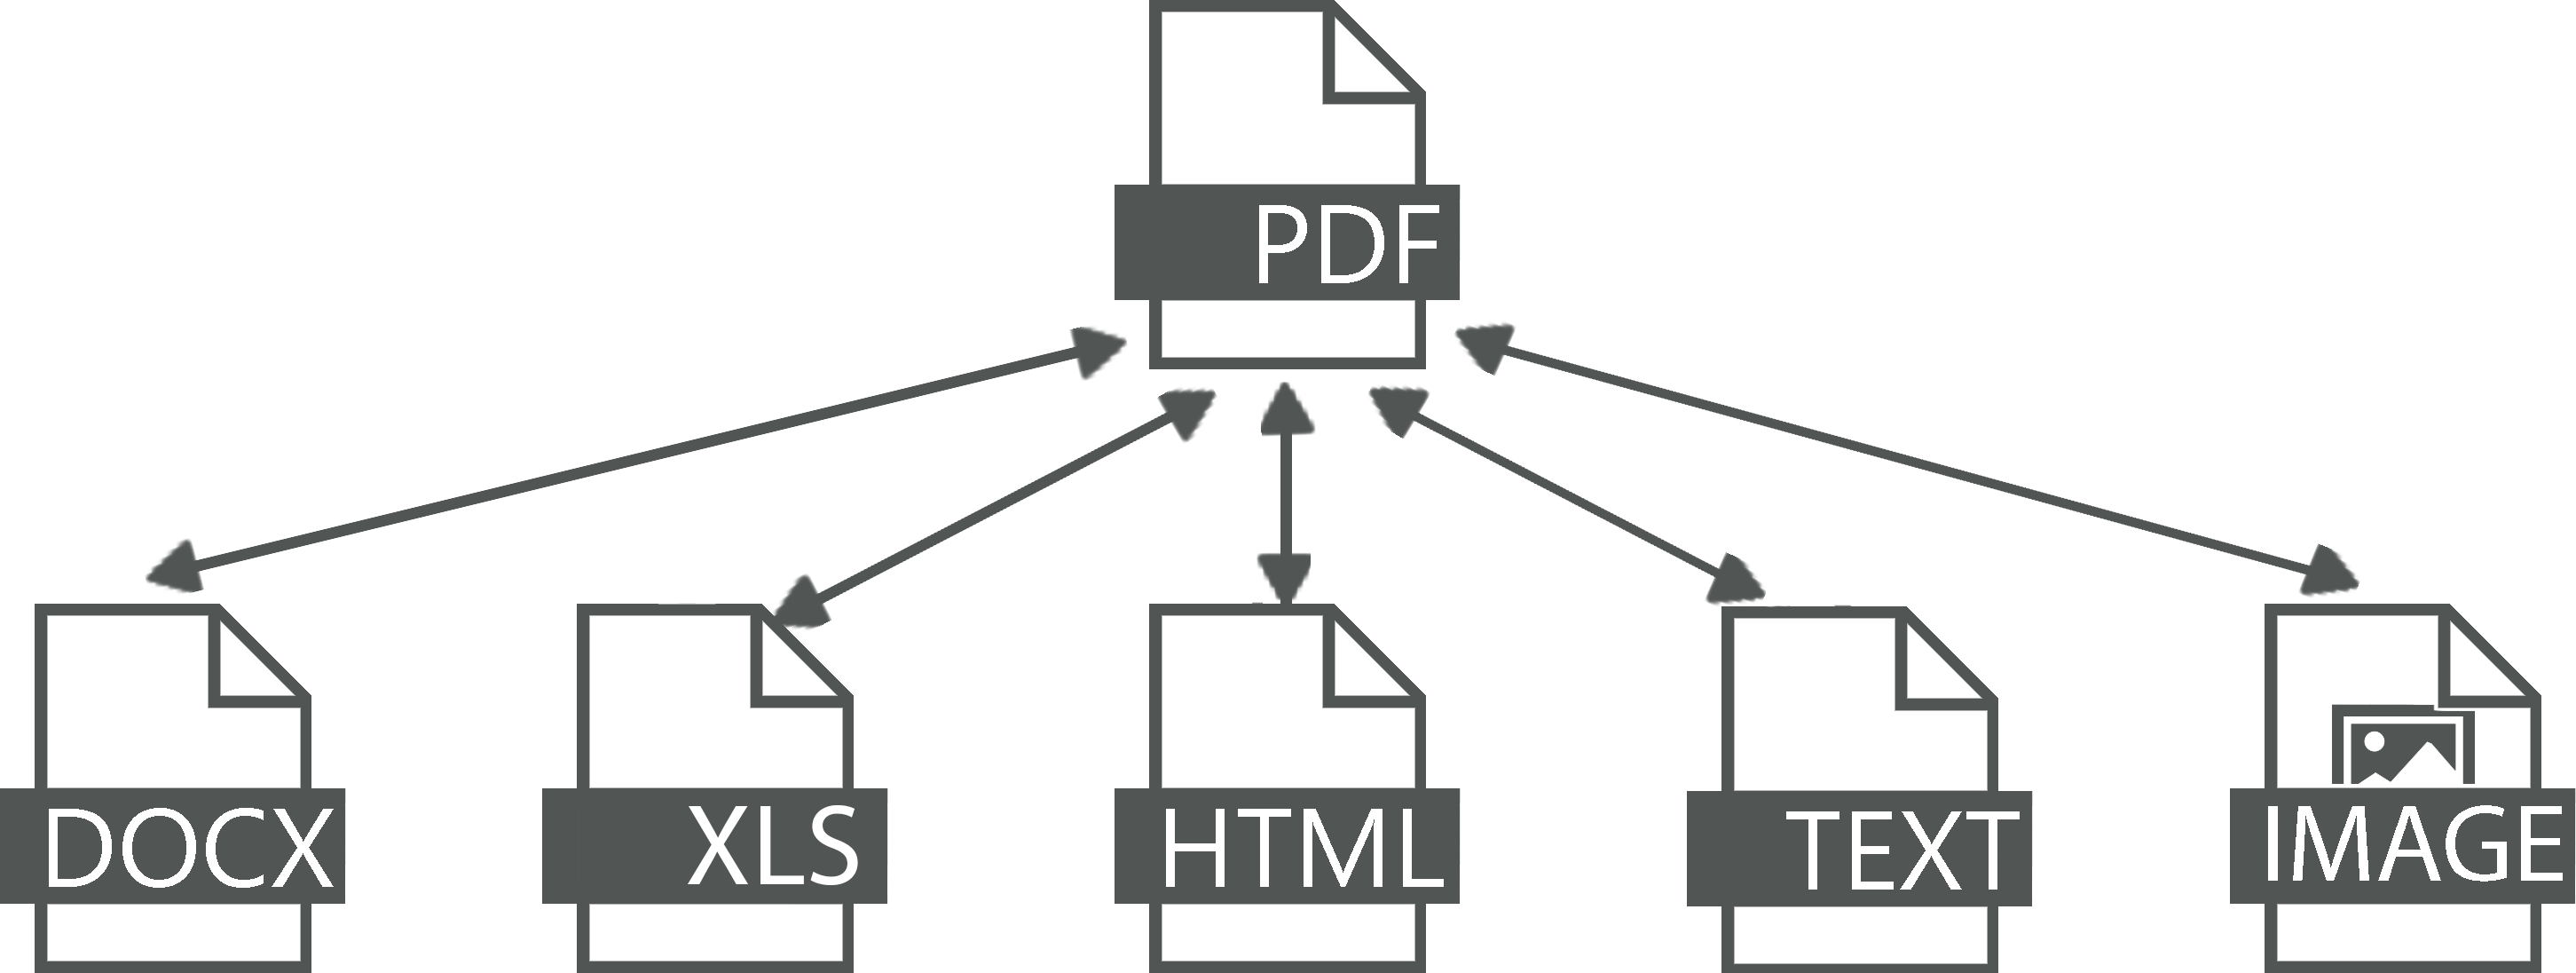 Программы First PDF поддерживает форматы конвертирования DOCX, RTF текста, JPEG, PNG, GIF, TIFF, BMP, WMF, EMF, HTML, XLS.